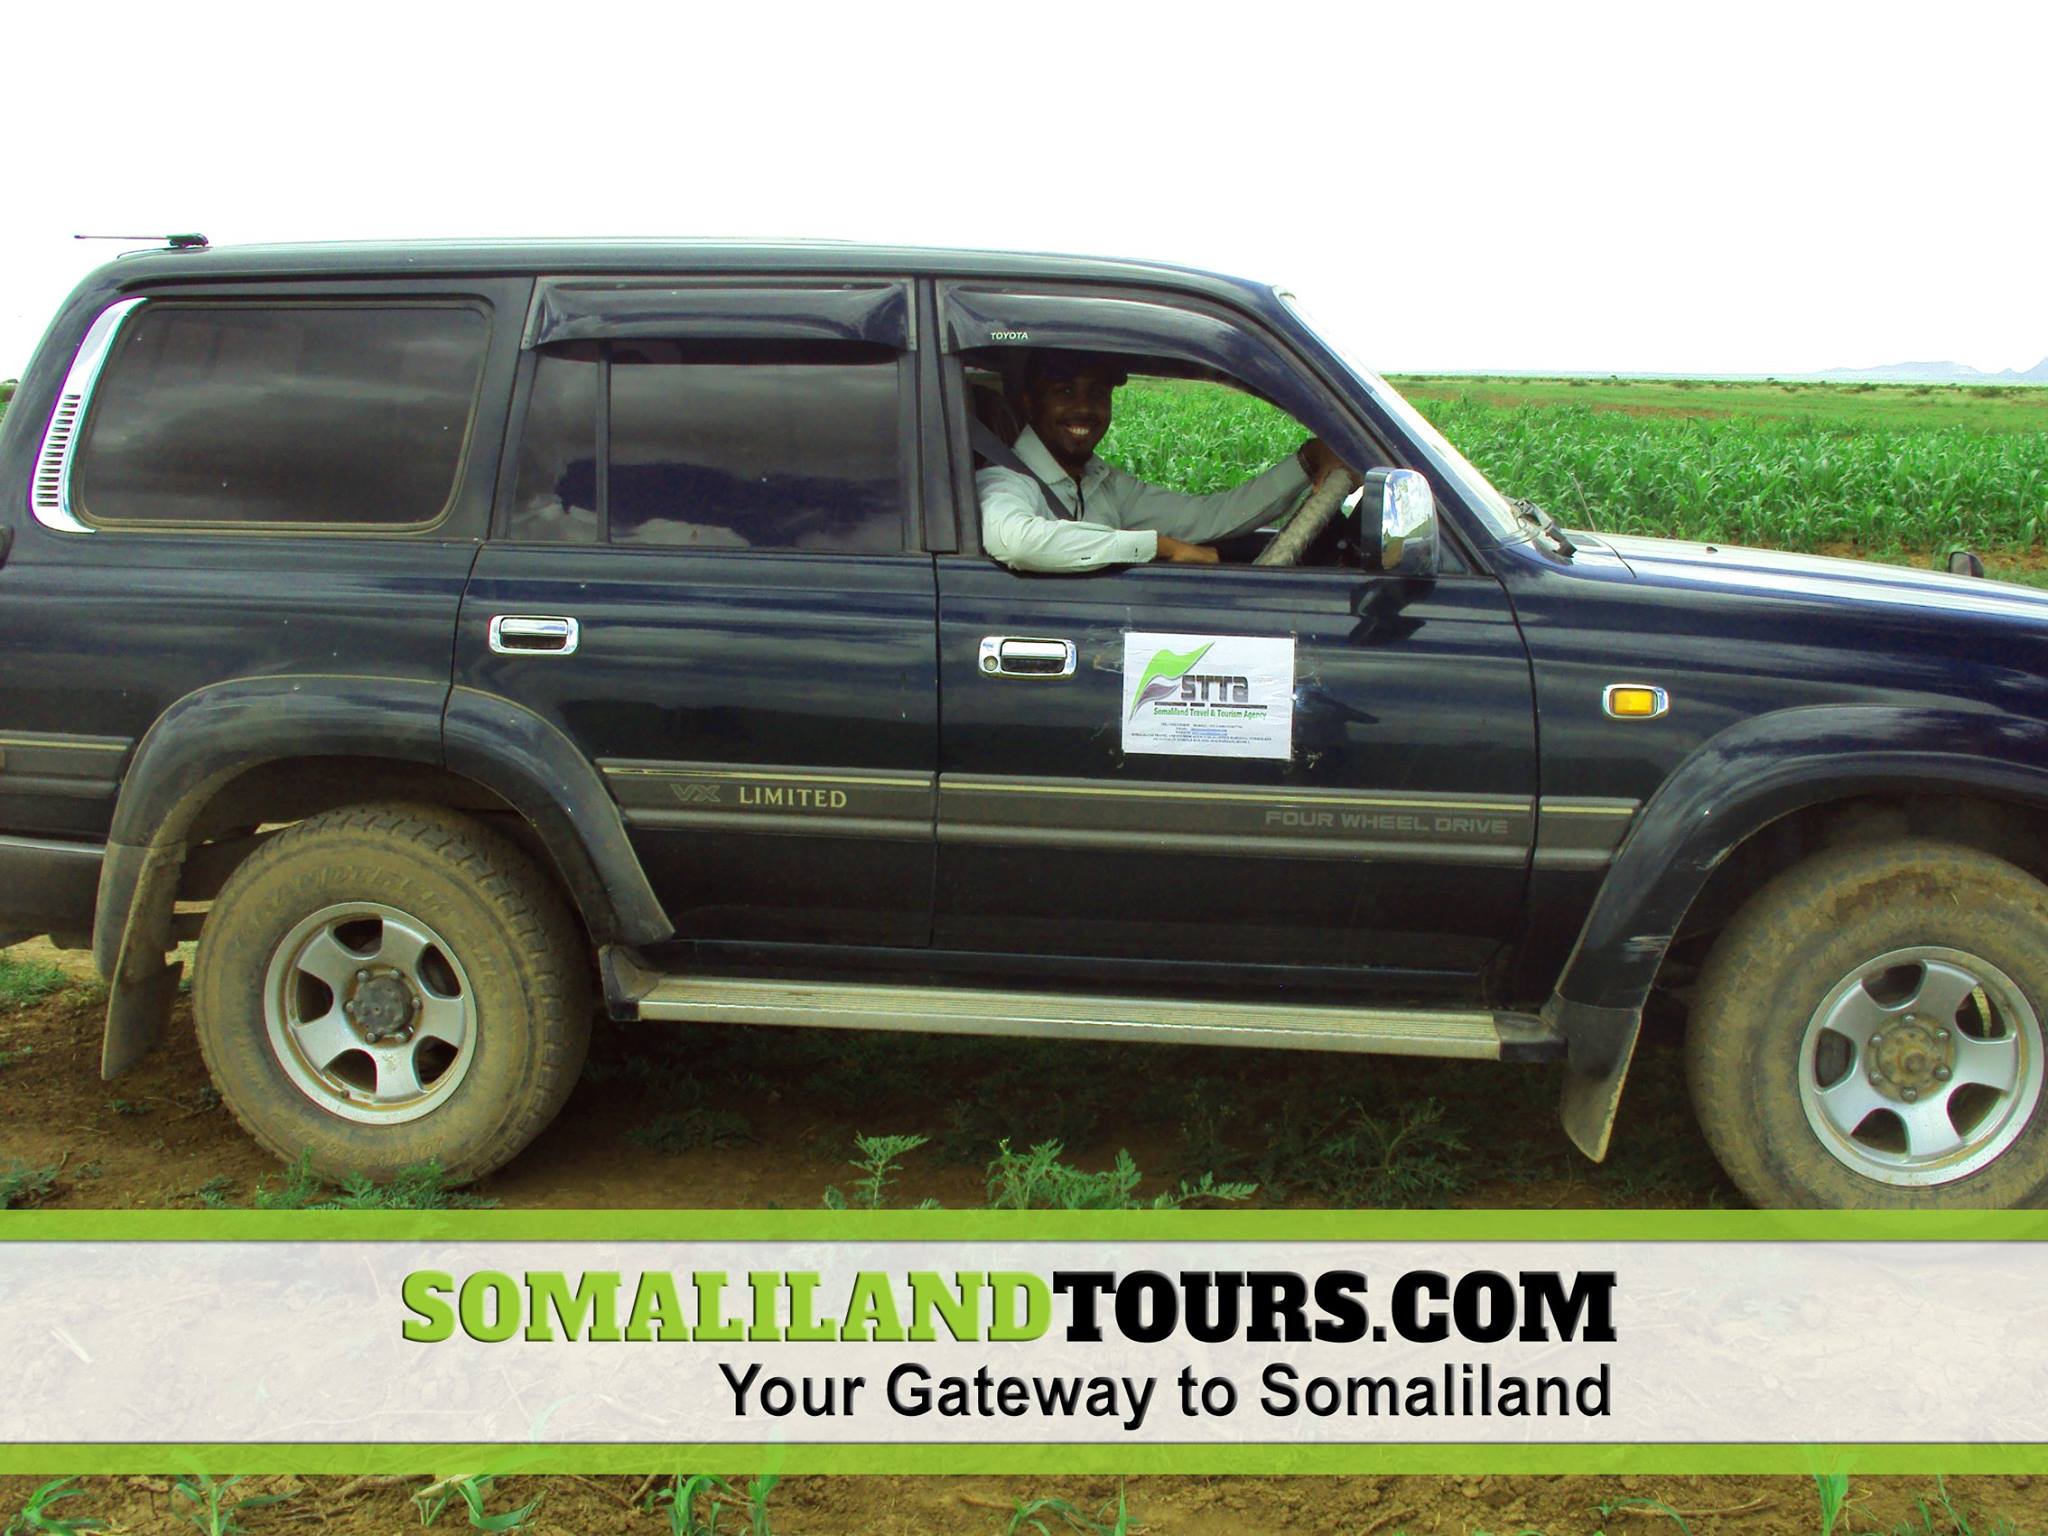 somalilandtours.com